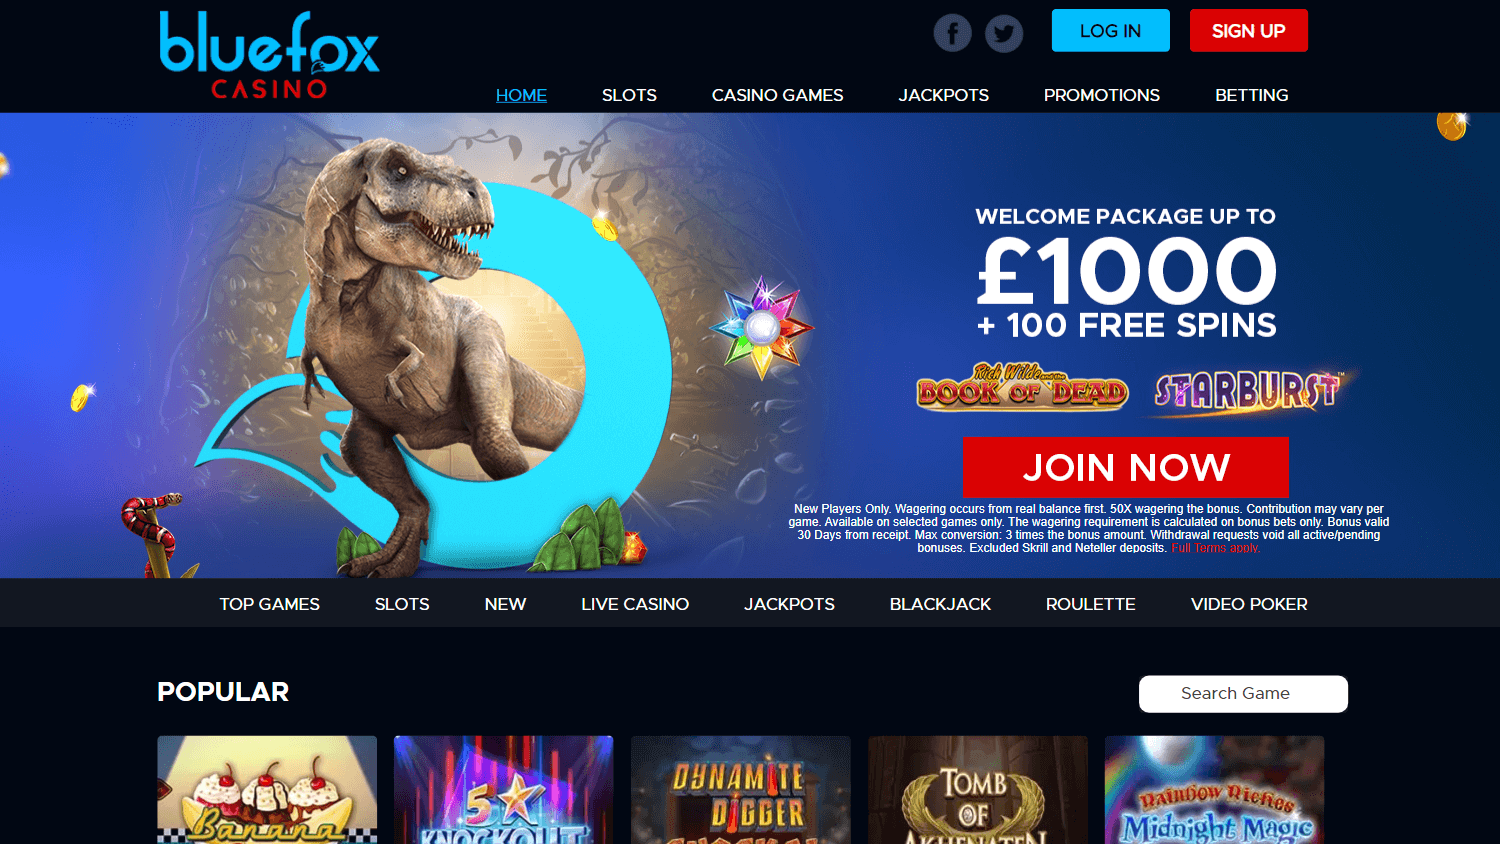 bluefox_casino_homepage_desktop